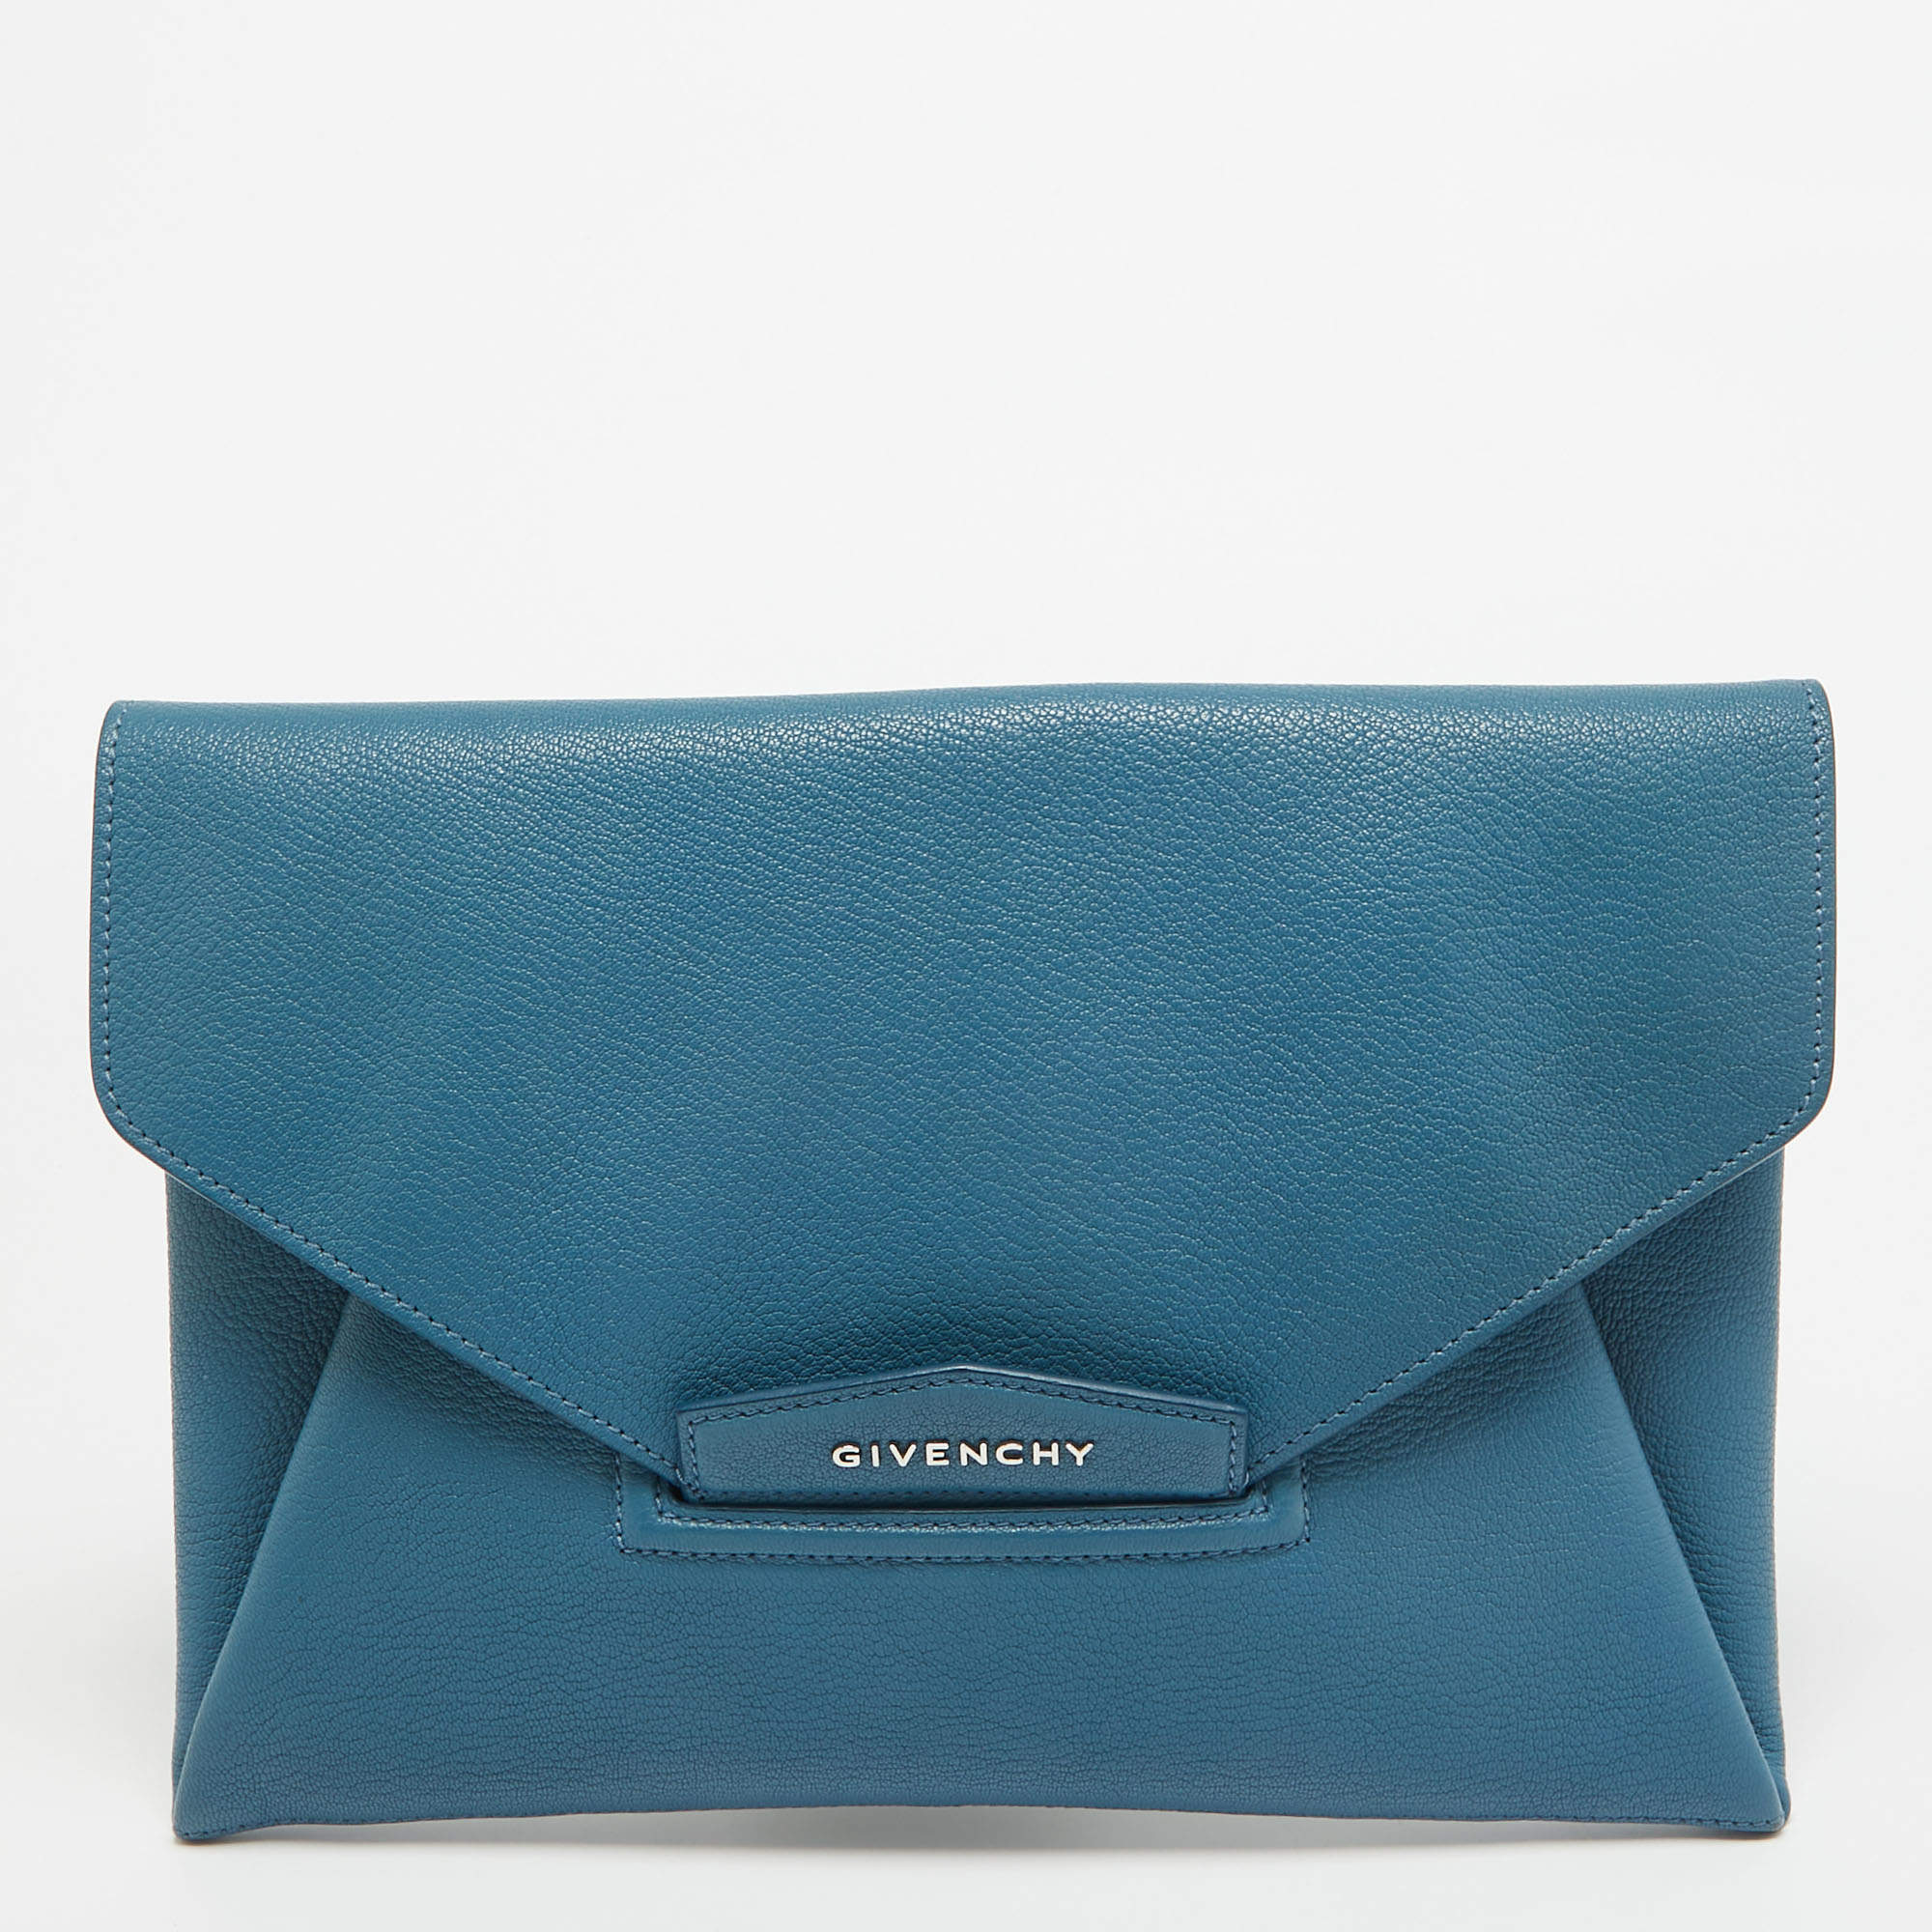 Givenchy Blue Leather Medium Antigona Envelope Clutch